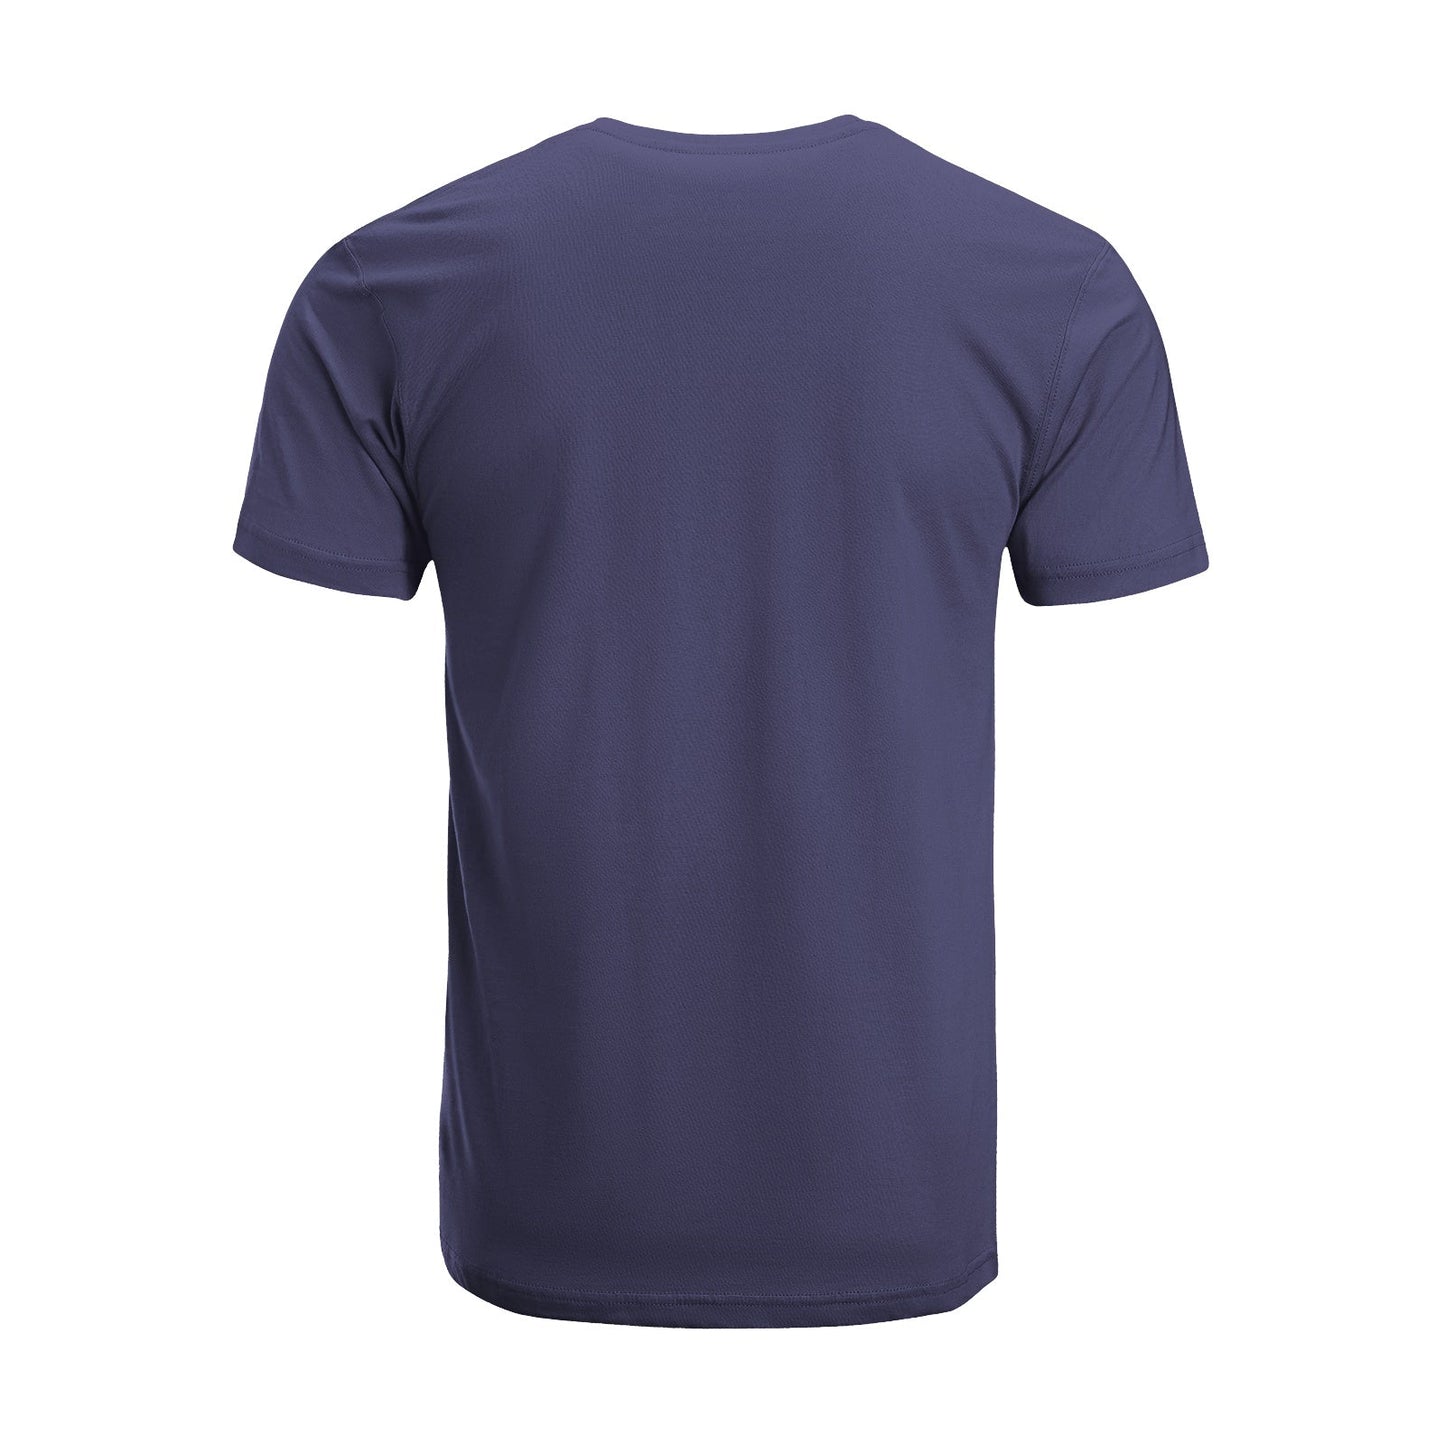 Unisex Short Sleeve Crew Neck Cotton Jersey T-Shirt CAT 18 - Tara-Outfits.com